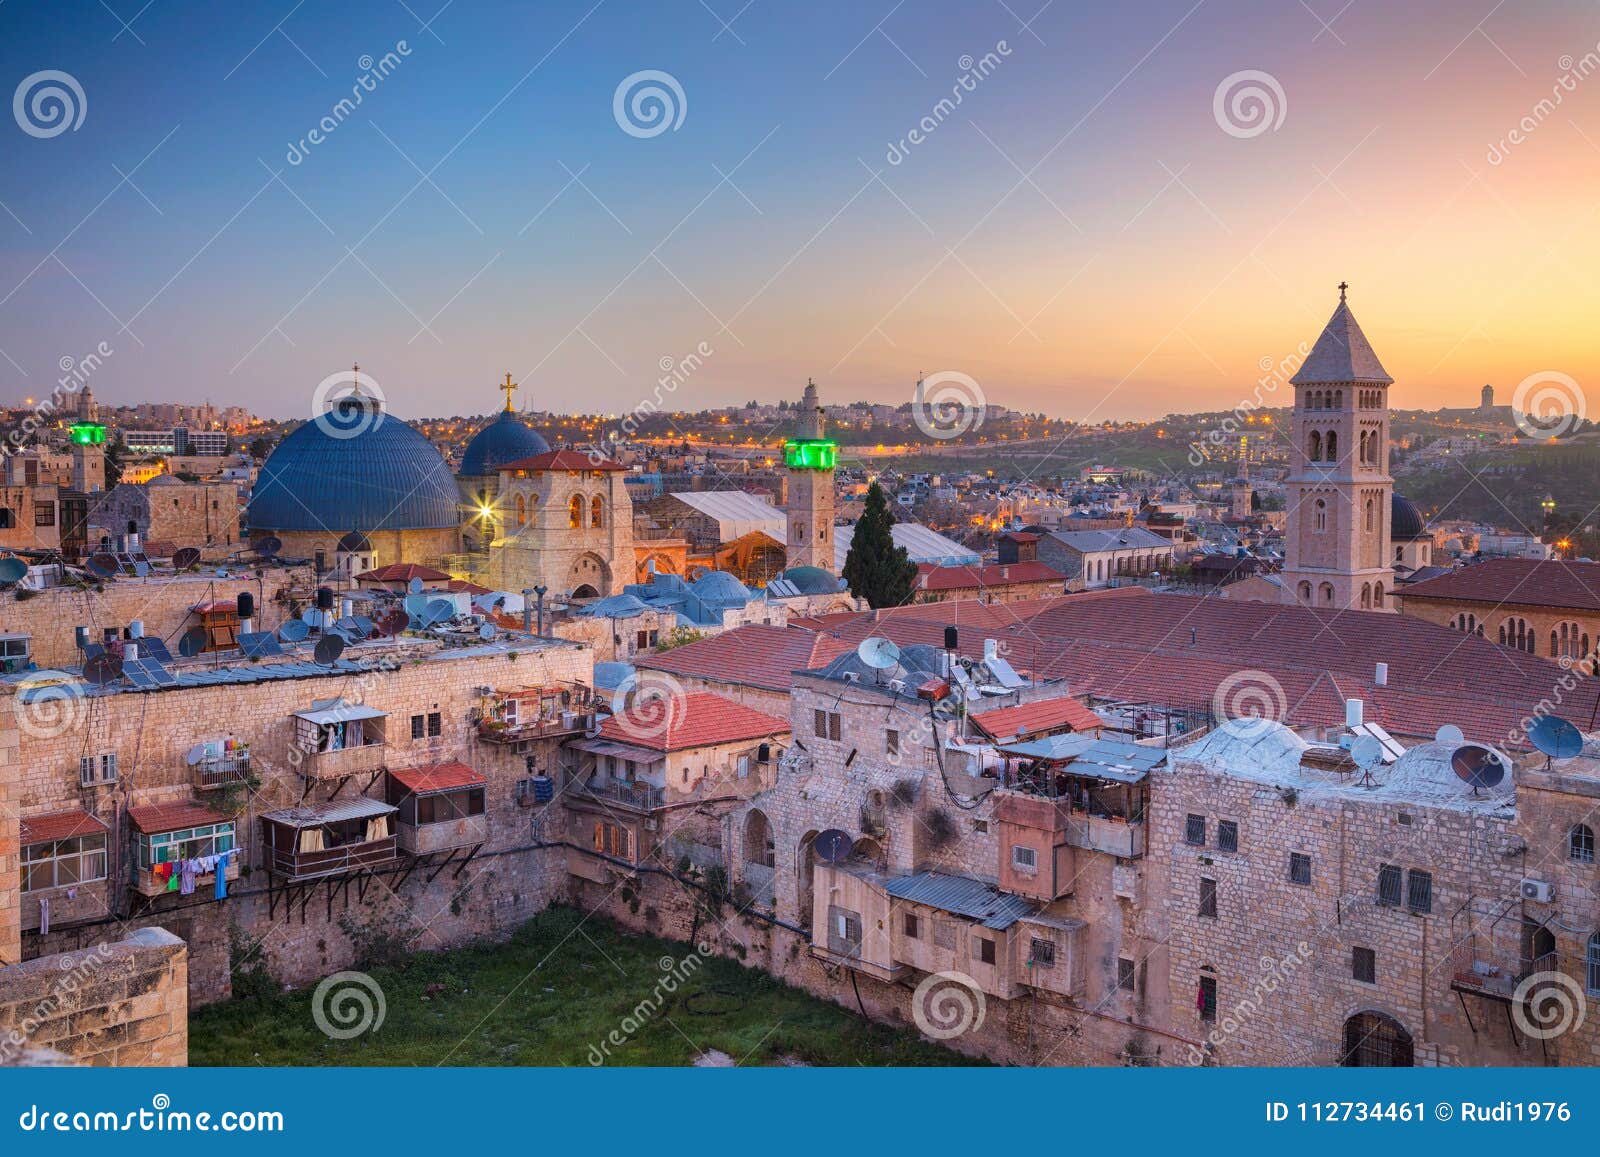 city of jerusalem, israel.